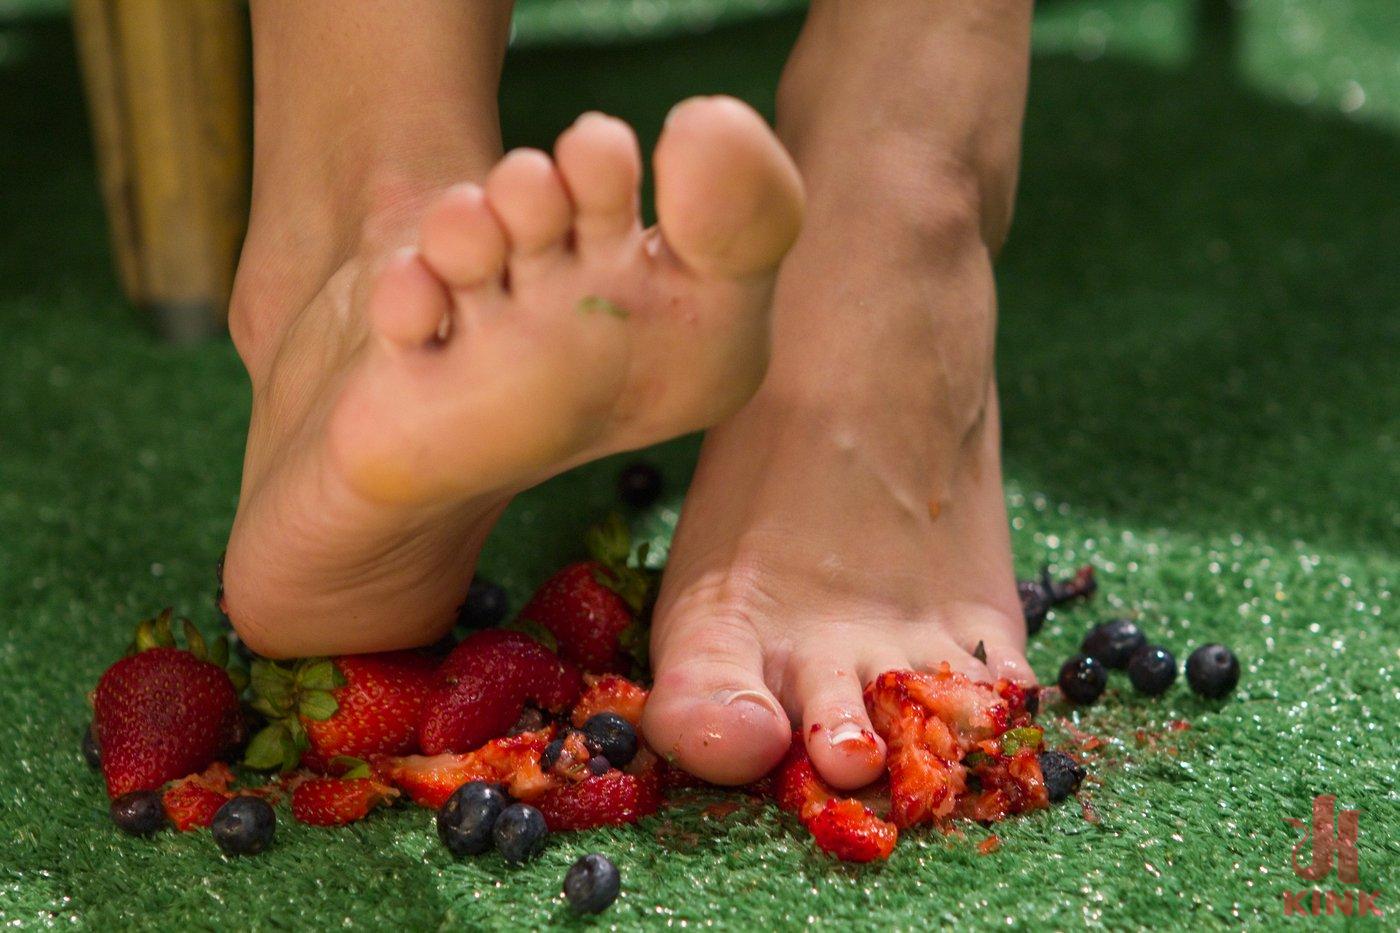 Foot Food Porn - Lesbian Strawberry Foot Food Crushing!